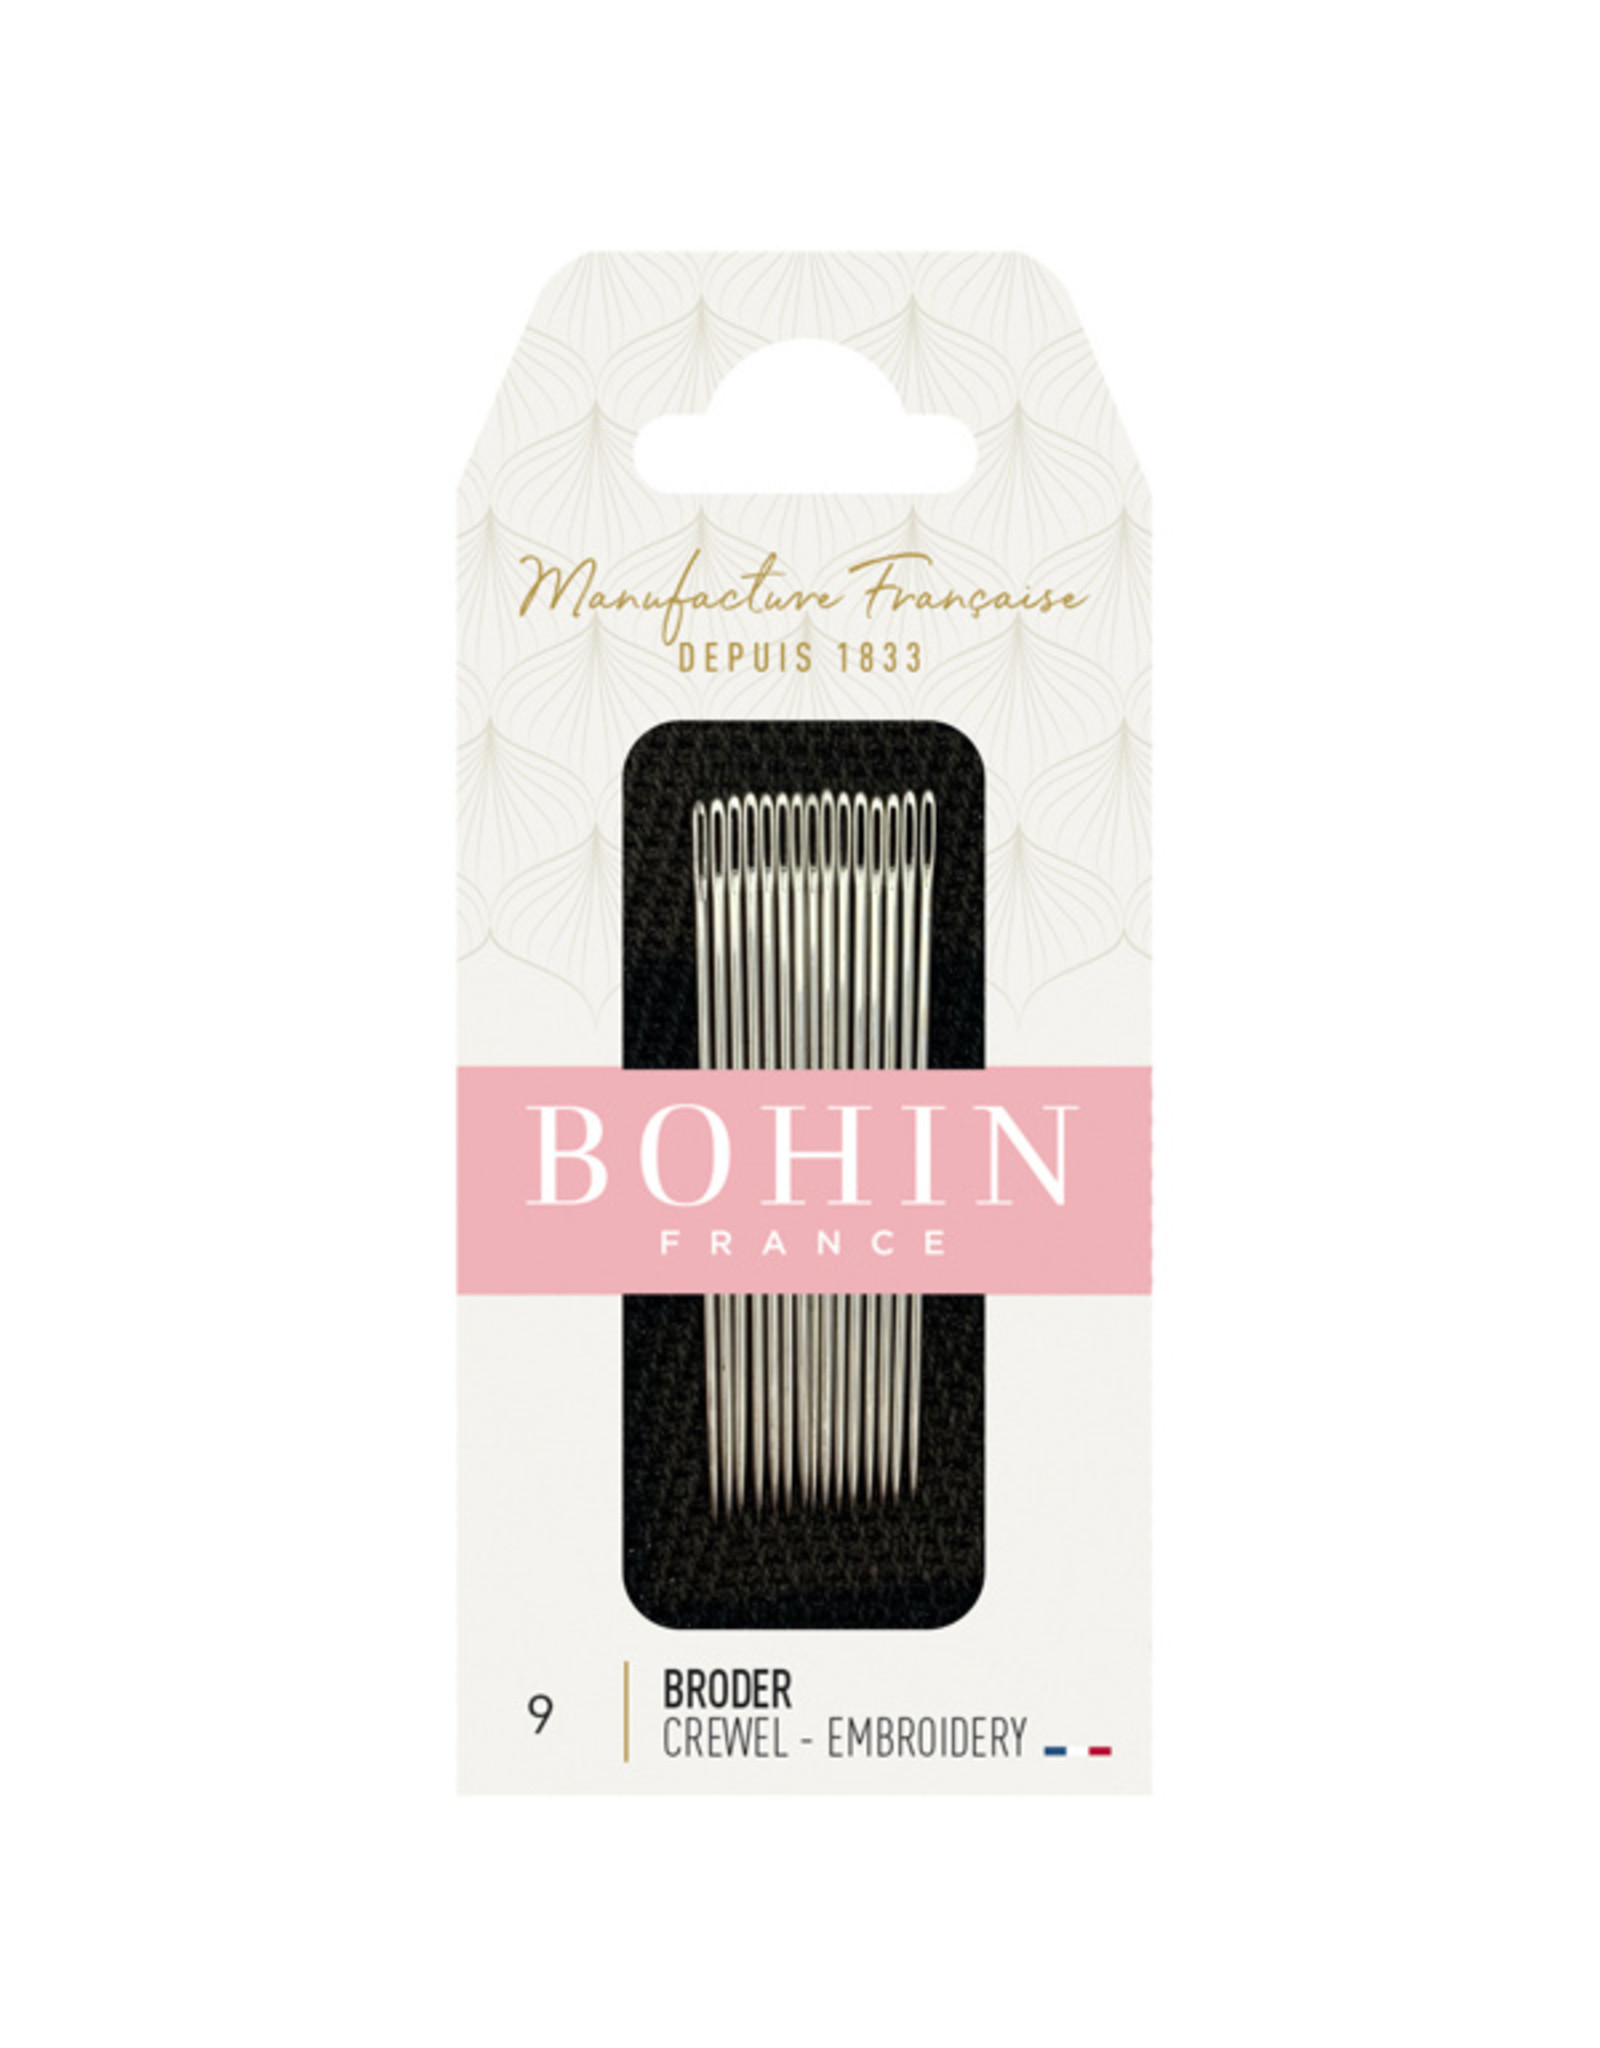 Bohin Crewel/Embroidery - Embroidery needles - Nr 9